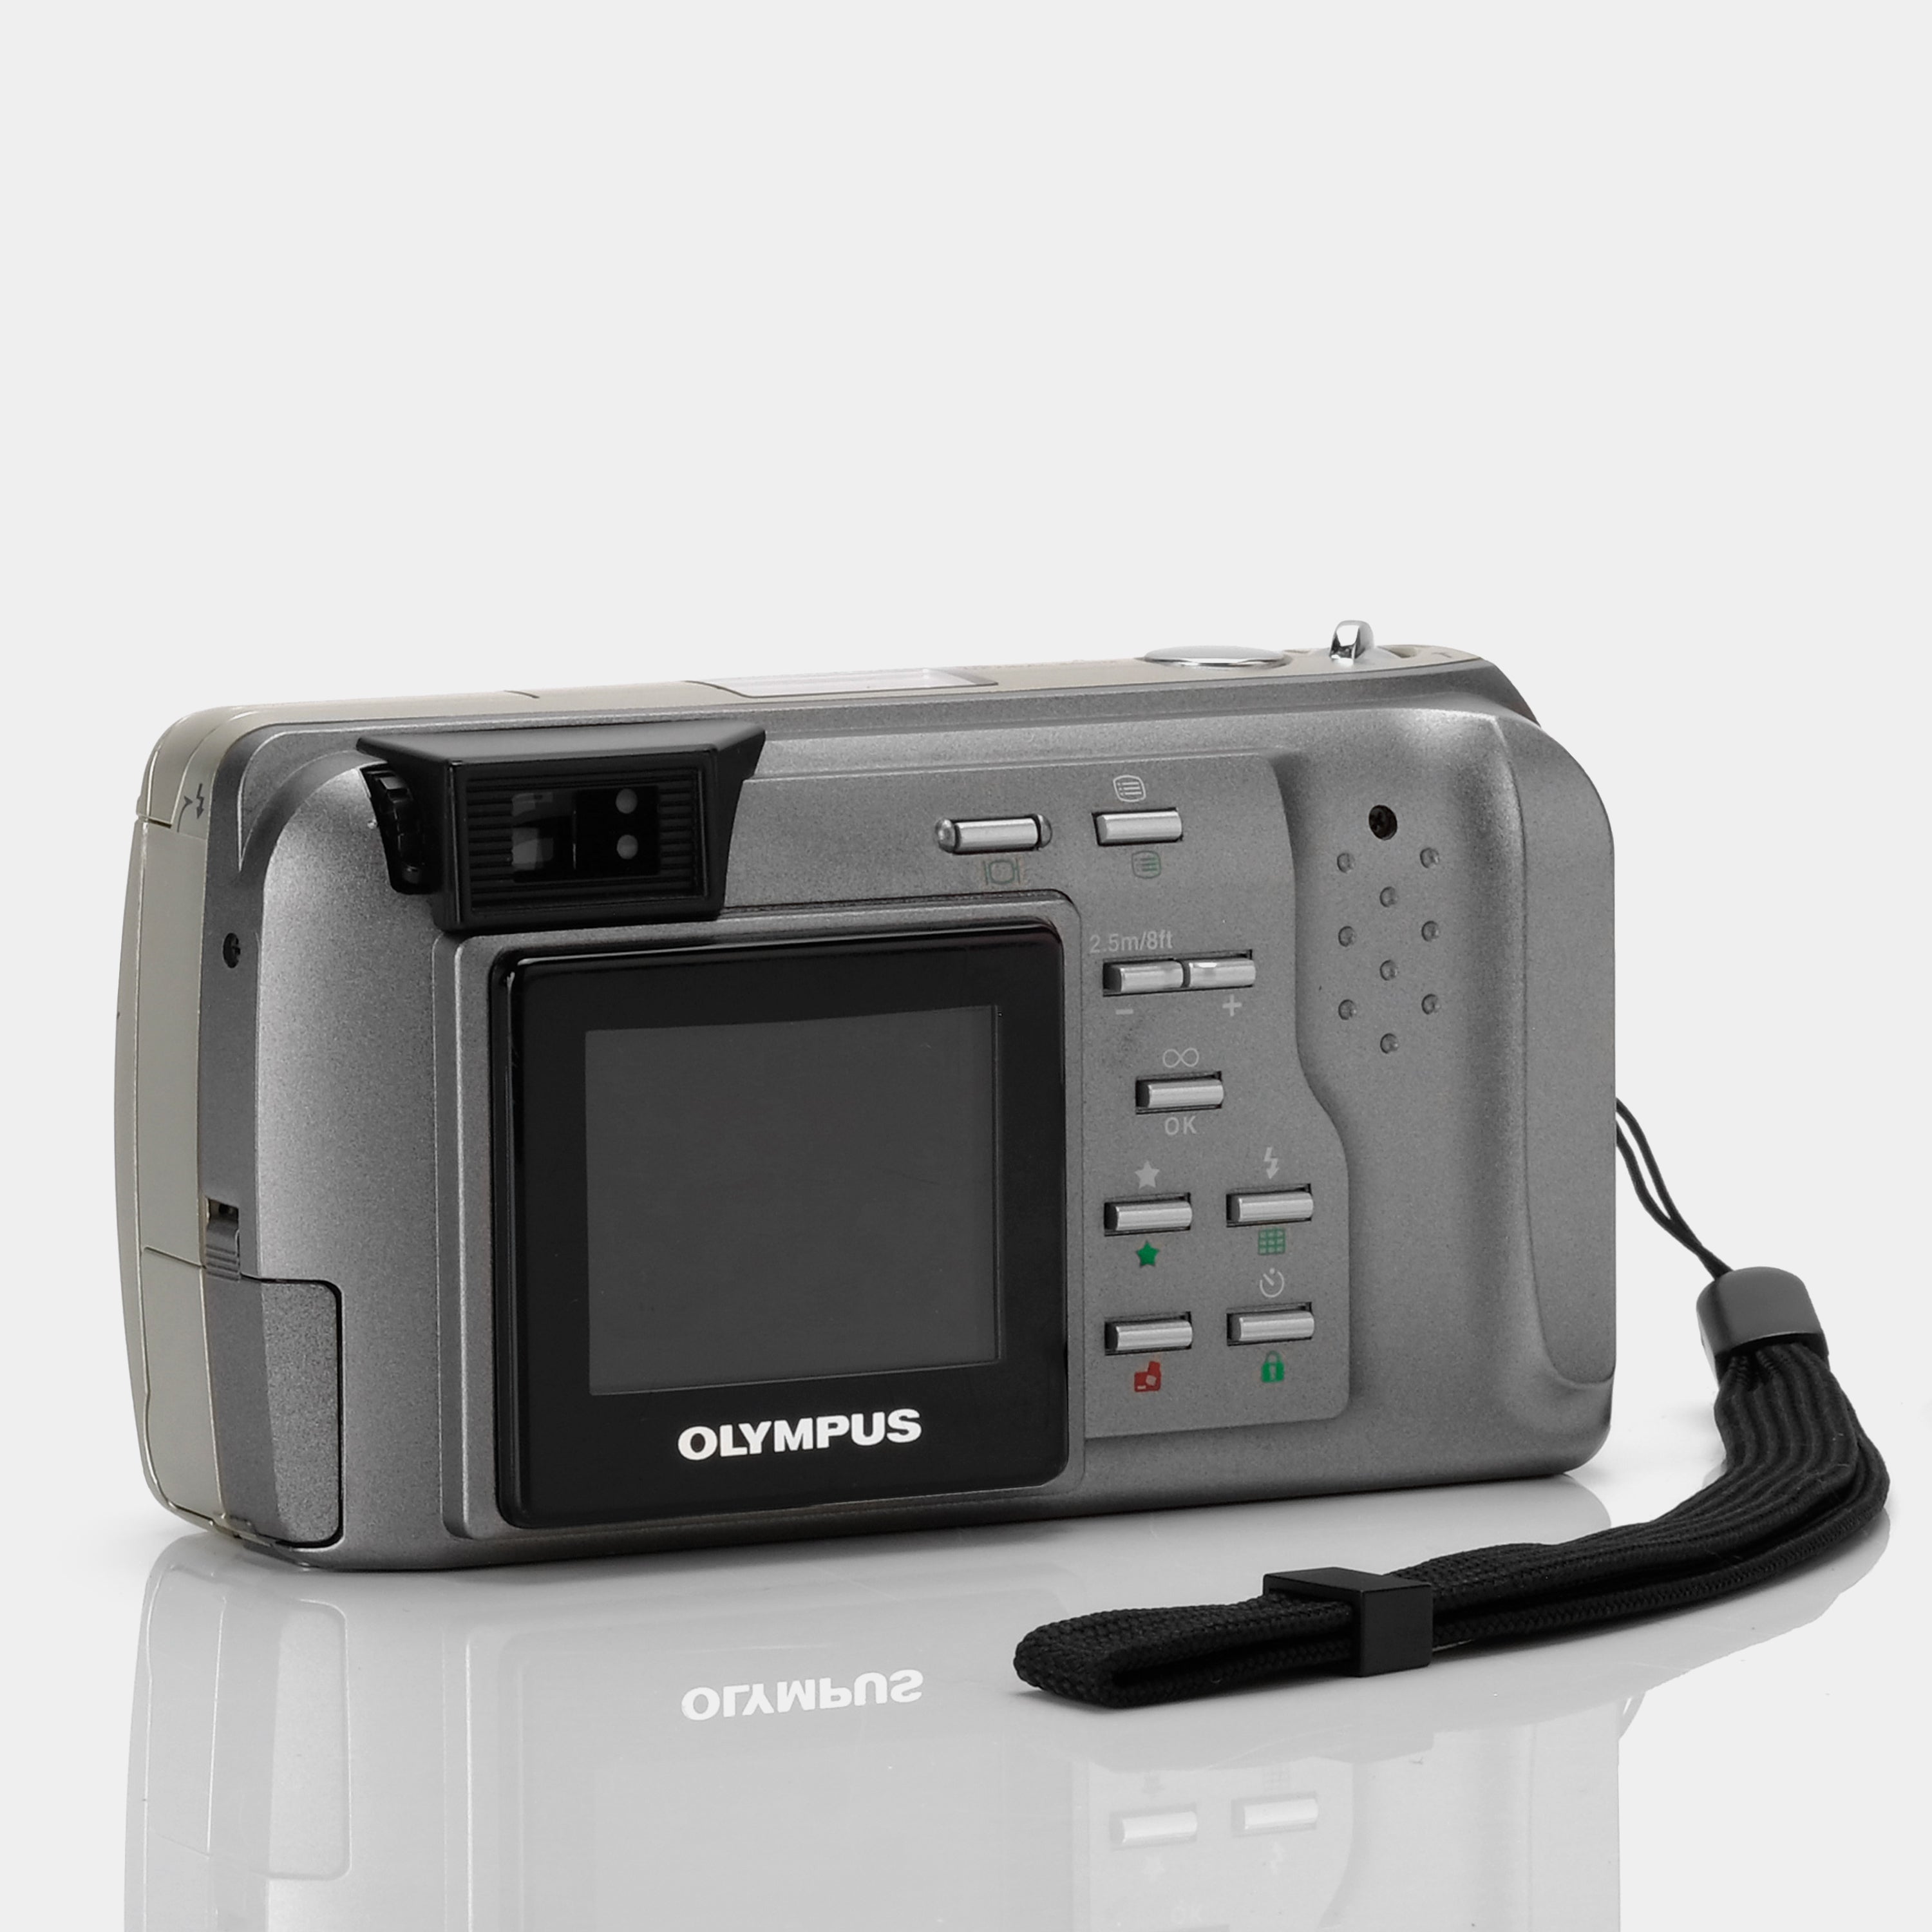 Olympus Camedia D-450 Point and Shoot Digital Camera